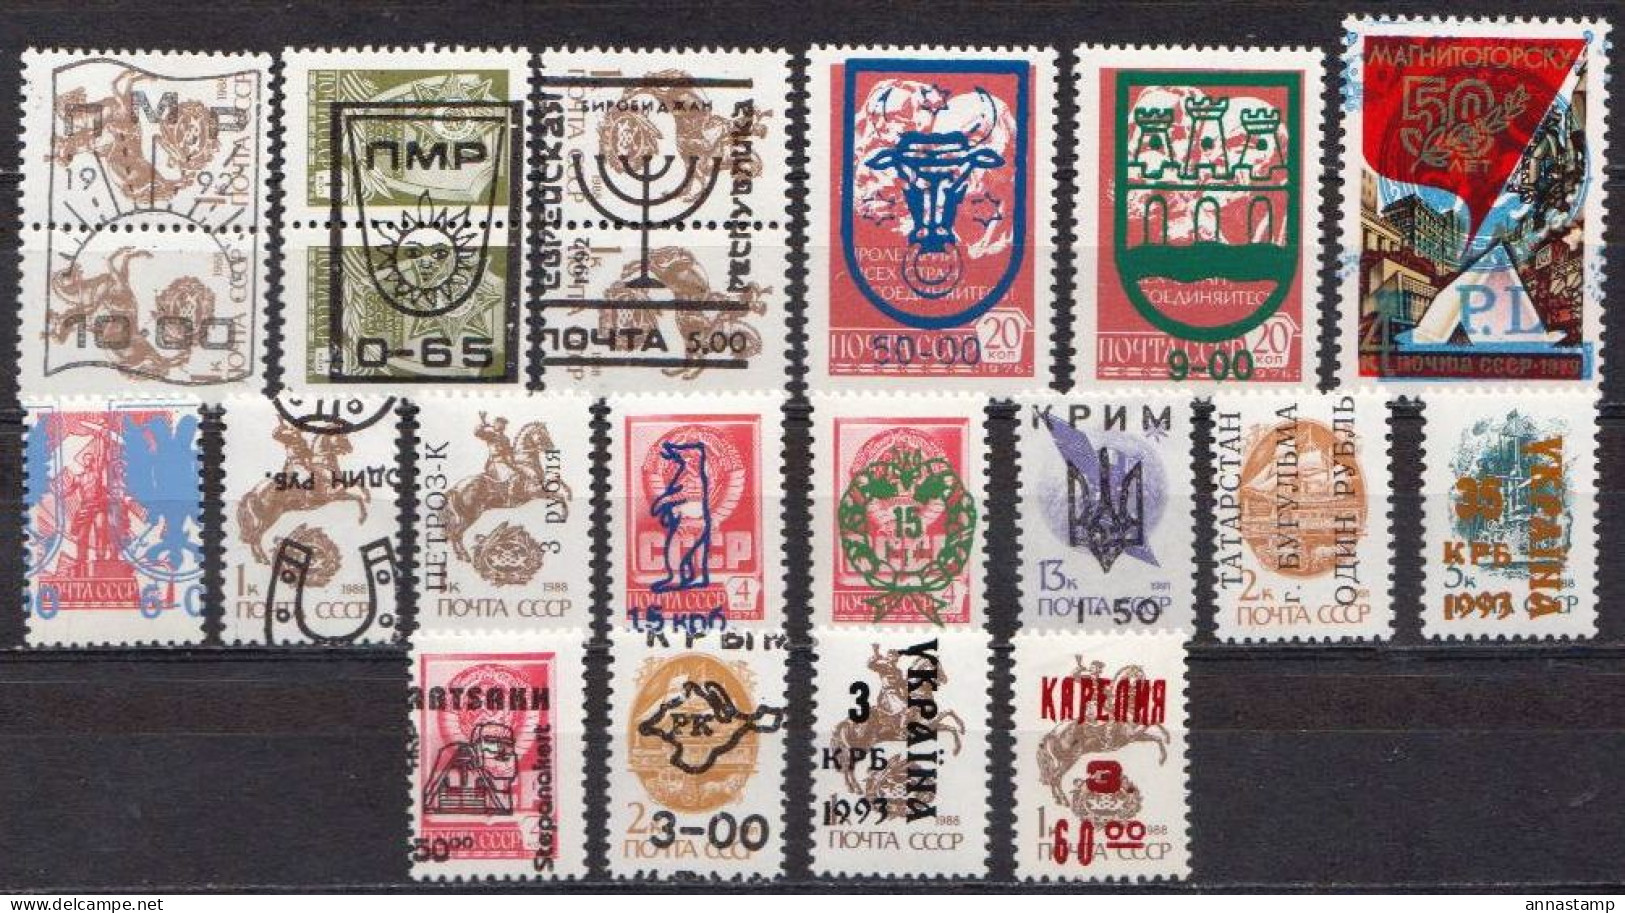 Russia MNH Overprinted Stamps With Local Overprints, Interesting! - Sammlungen